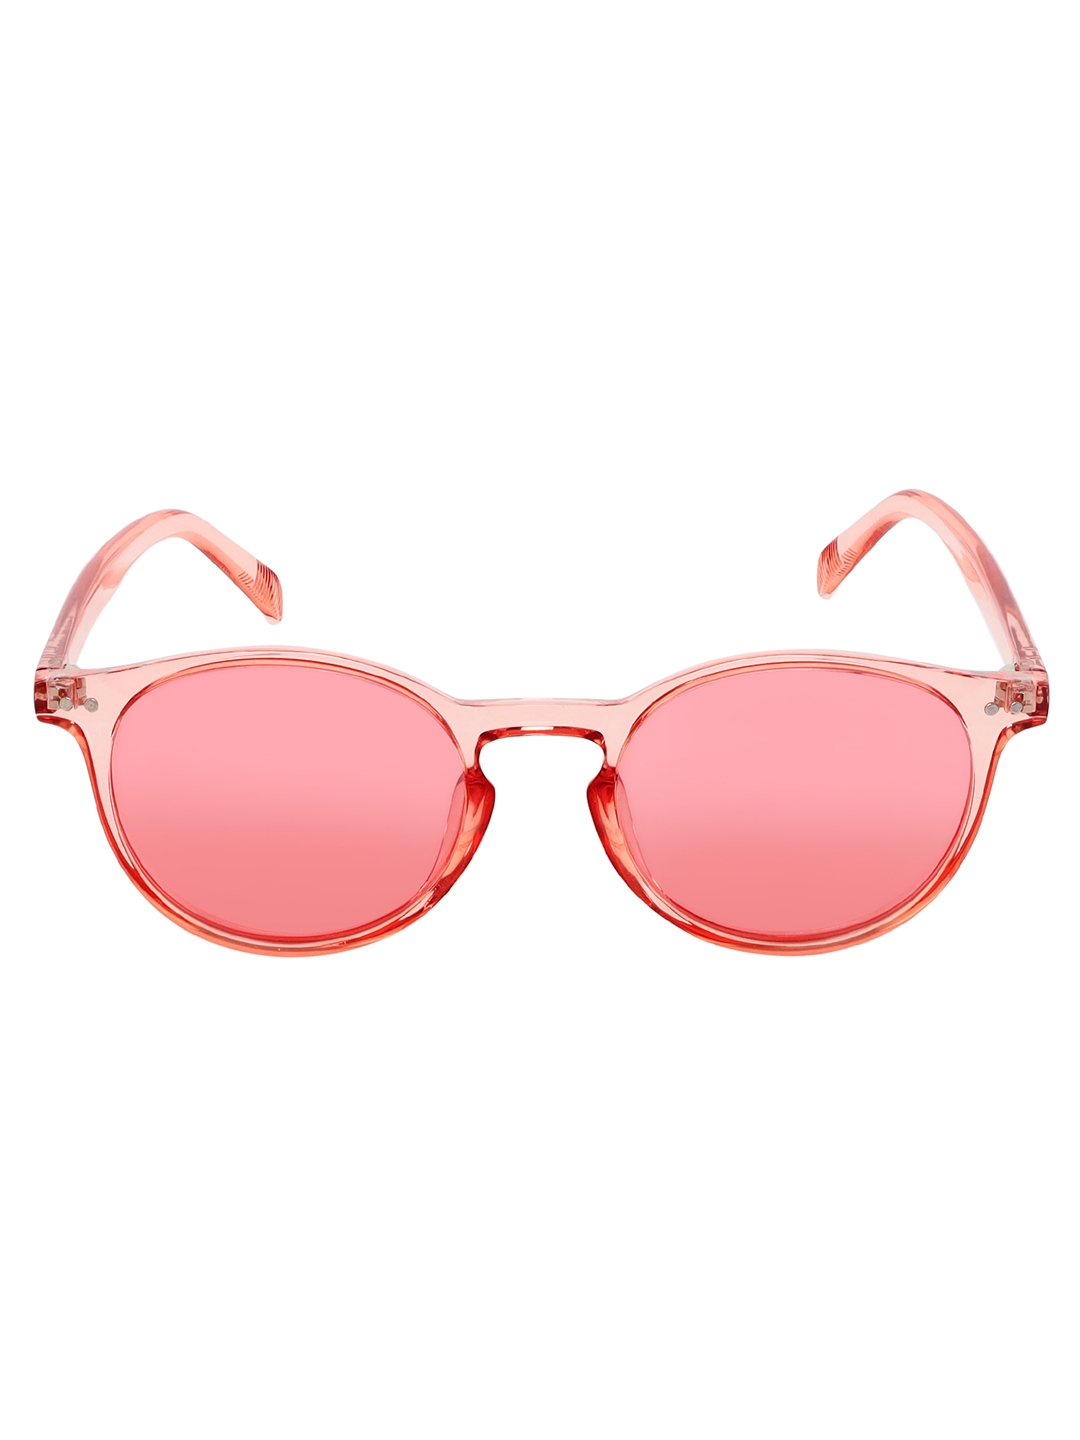 Aeropostale AERO_SUN_3331_C5 Summer SunGlasses with UV protection Polarized Anti Glare Summer Style Pink Non Reflective Lenses with Acrylic Frame